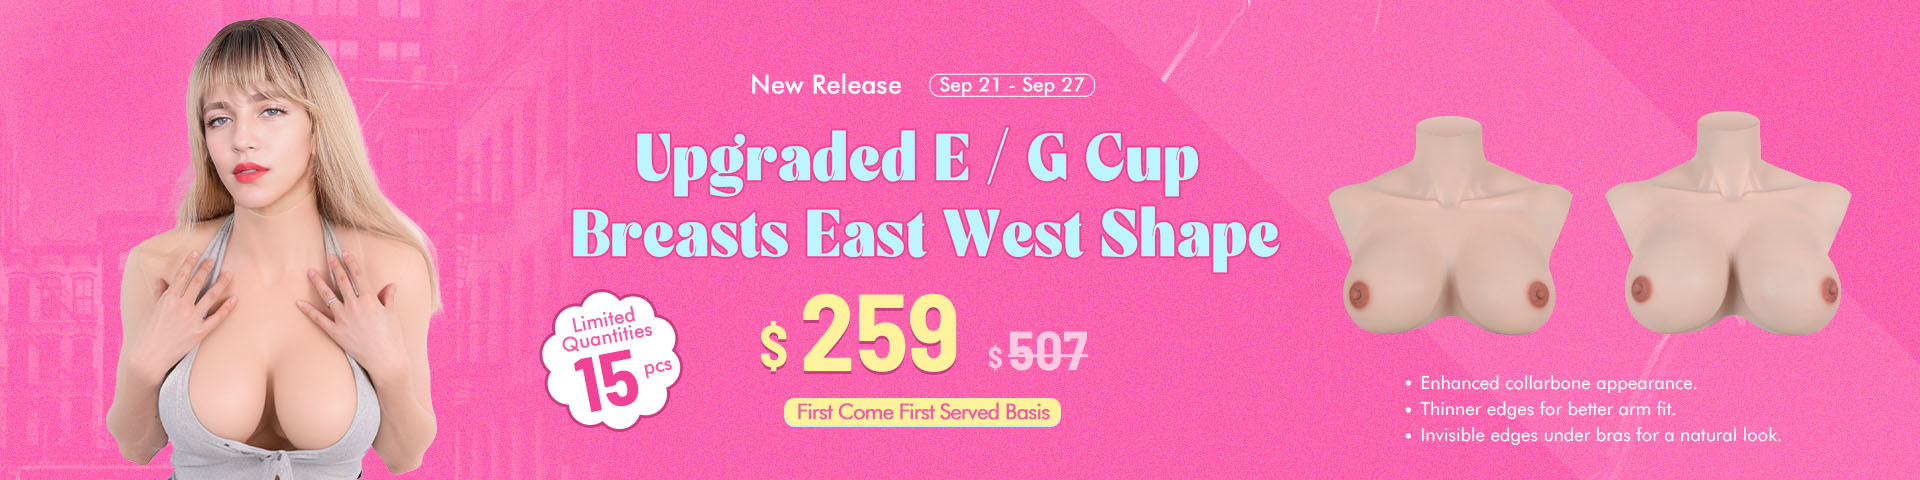 EG Breasts East West Shape 